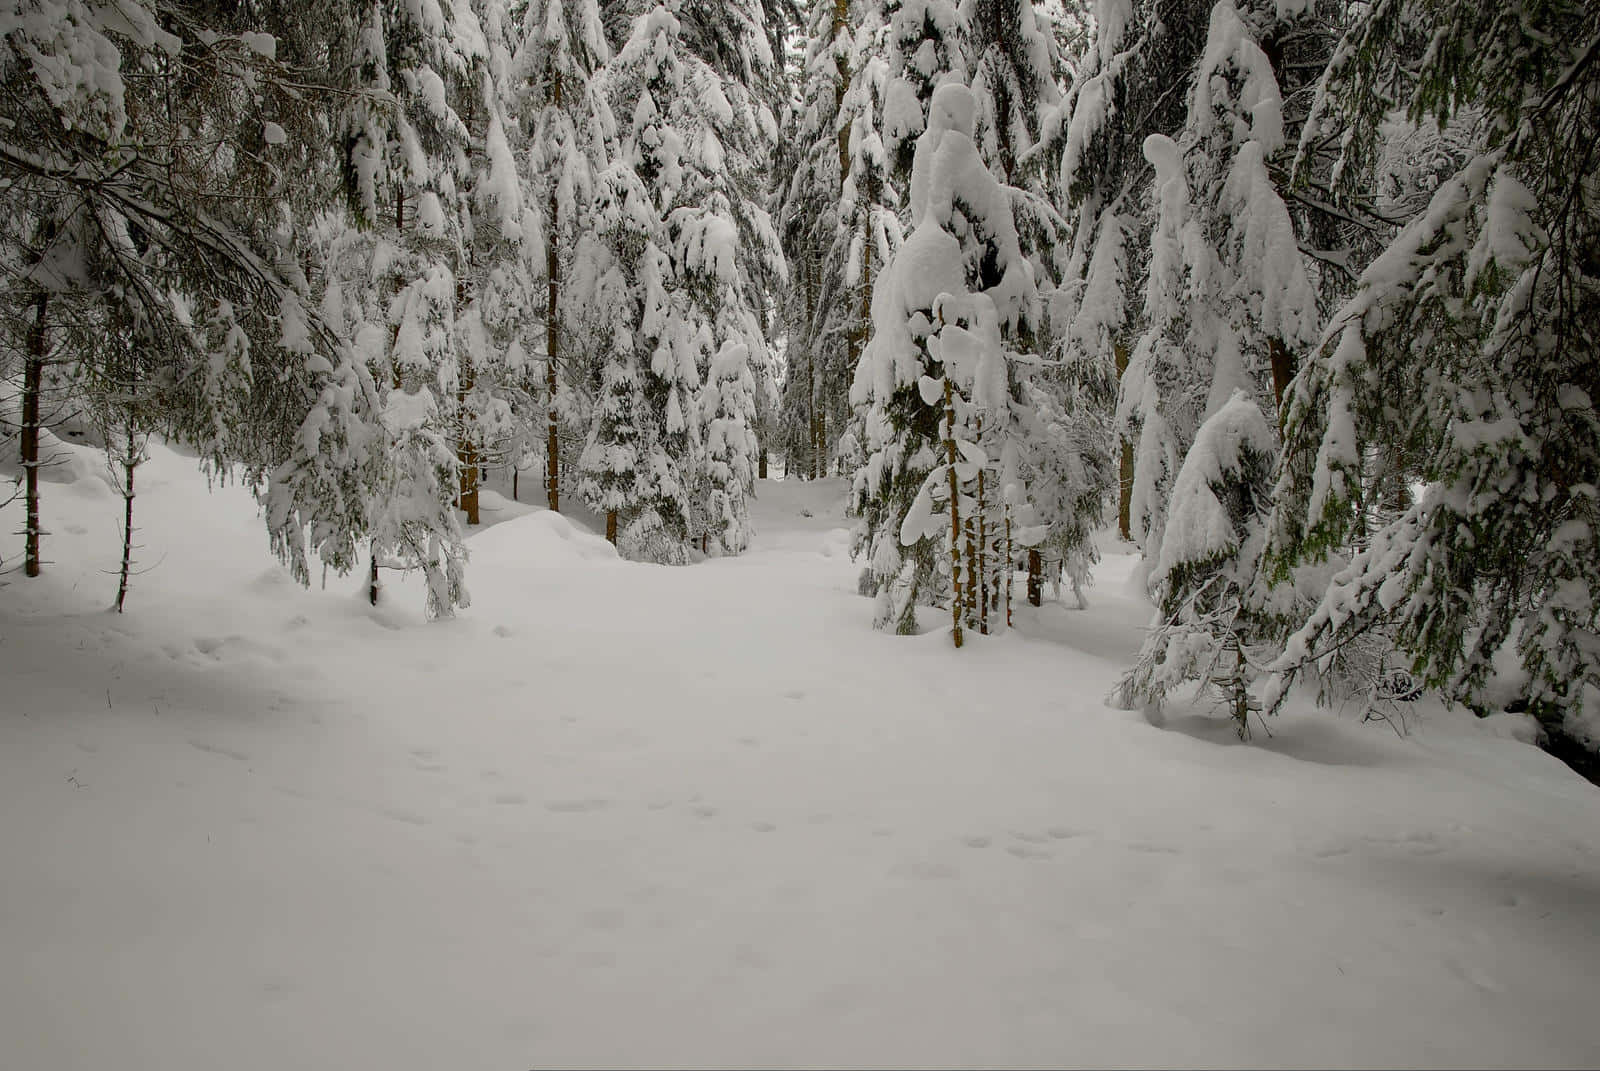 An idyllic snowy forest in winter.